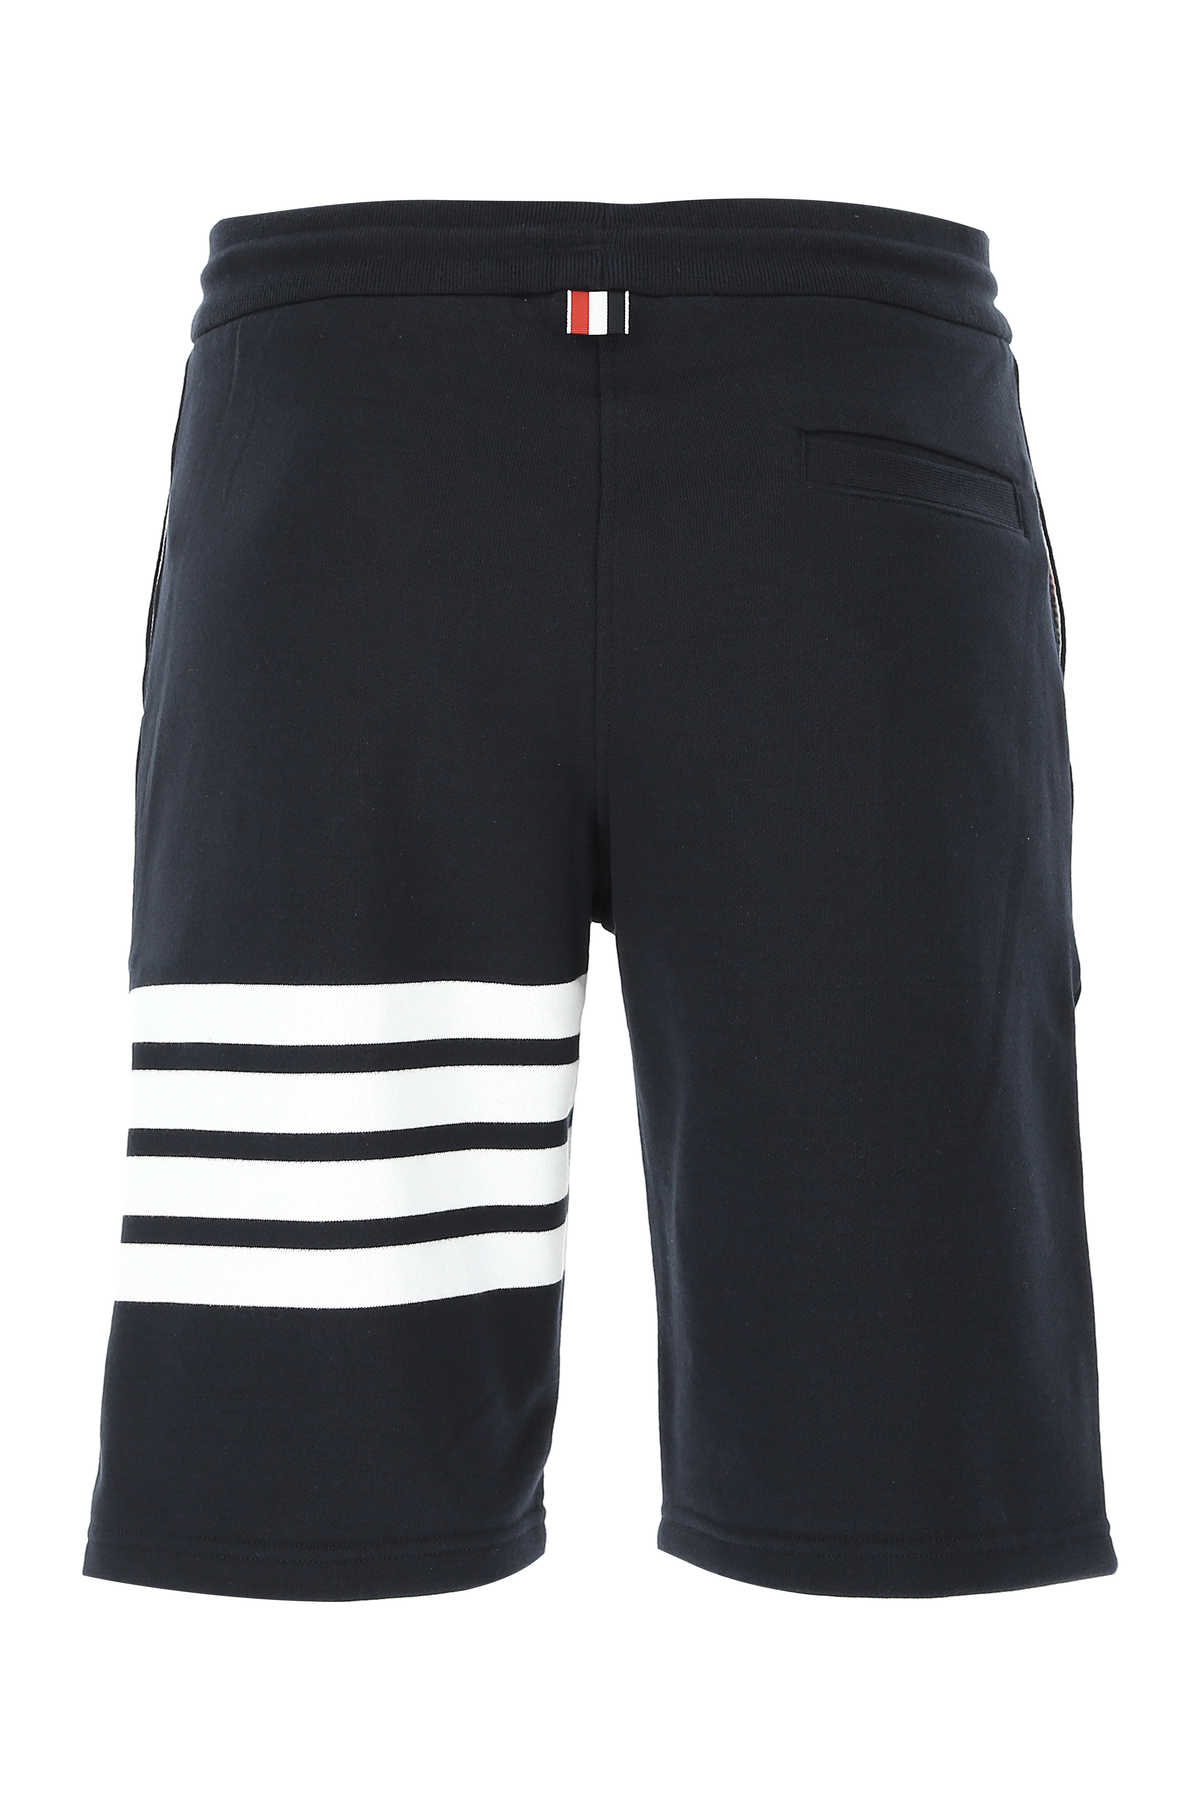 Thom Browne Dark Blue Cotton Bermuda Shorts In 461